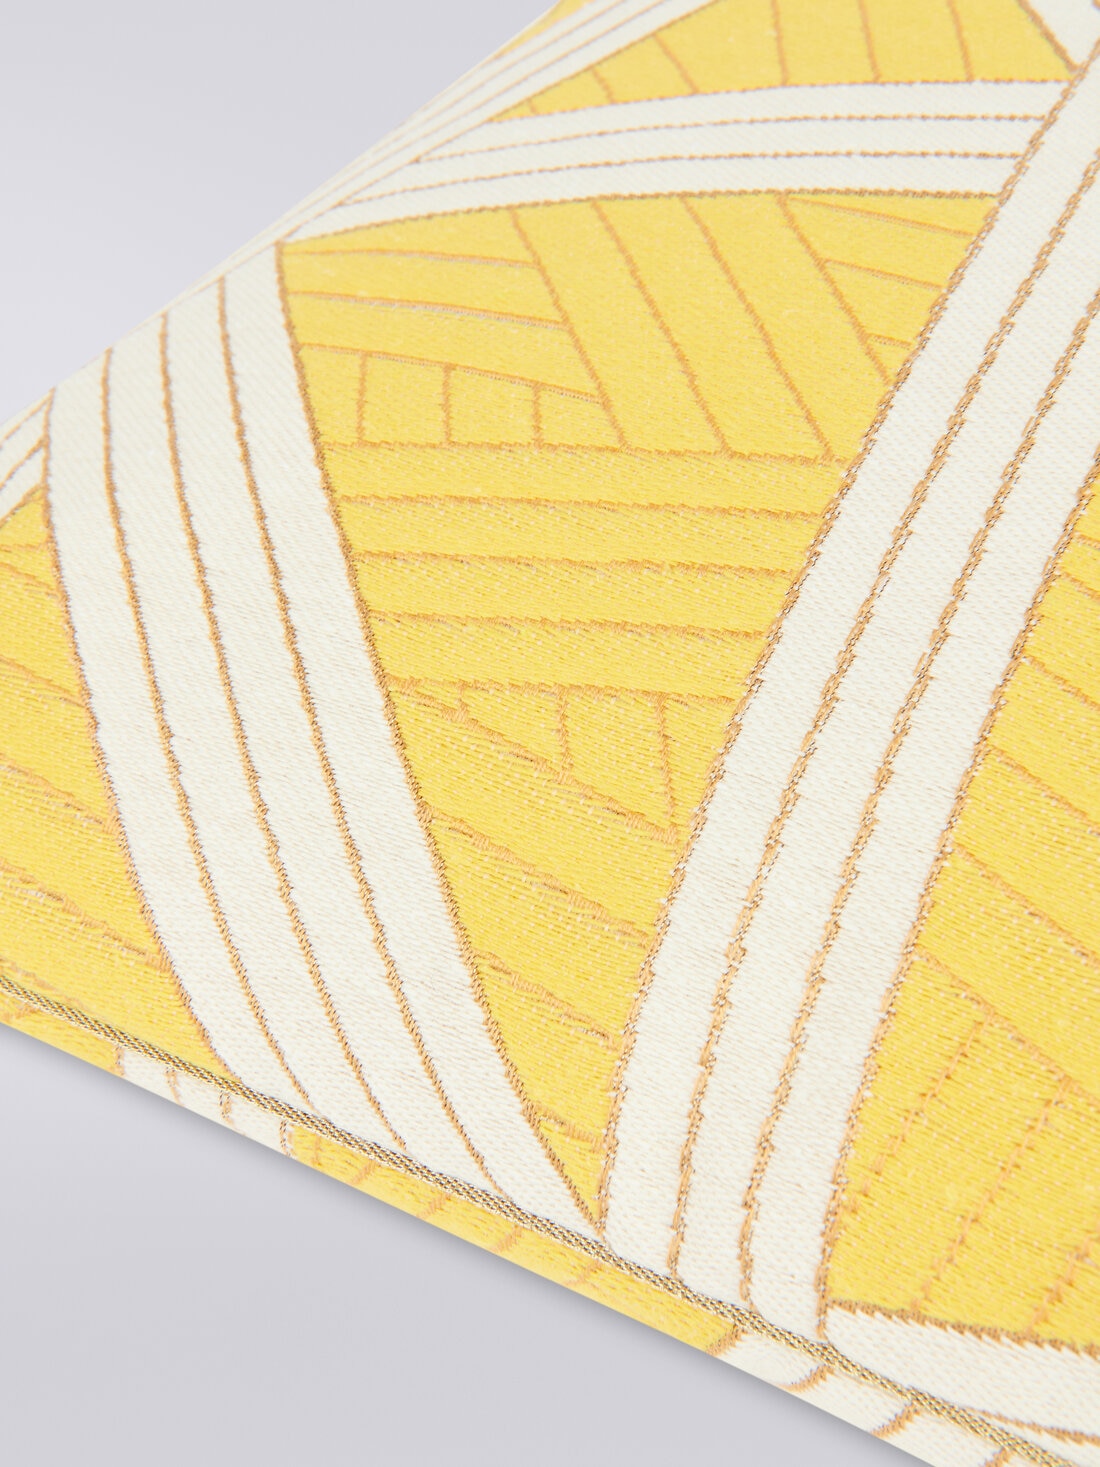 Nastri cushion 40x40 cm with stitching, Yellow  - 8051575830518 - 2